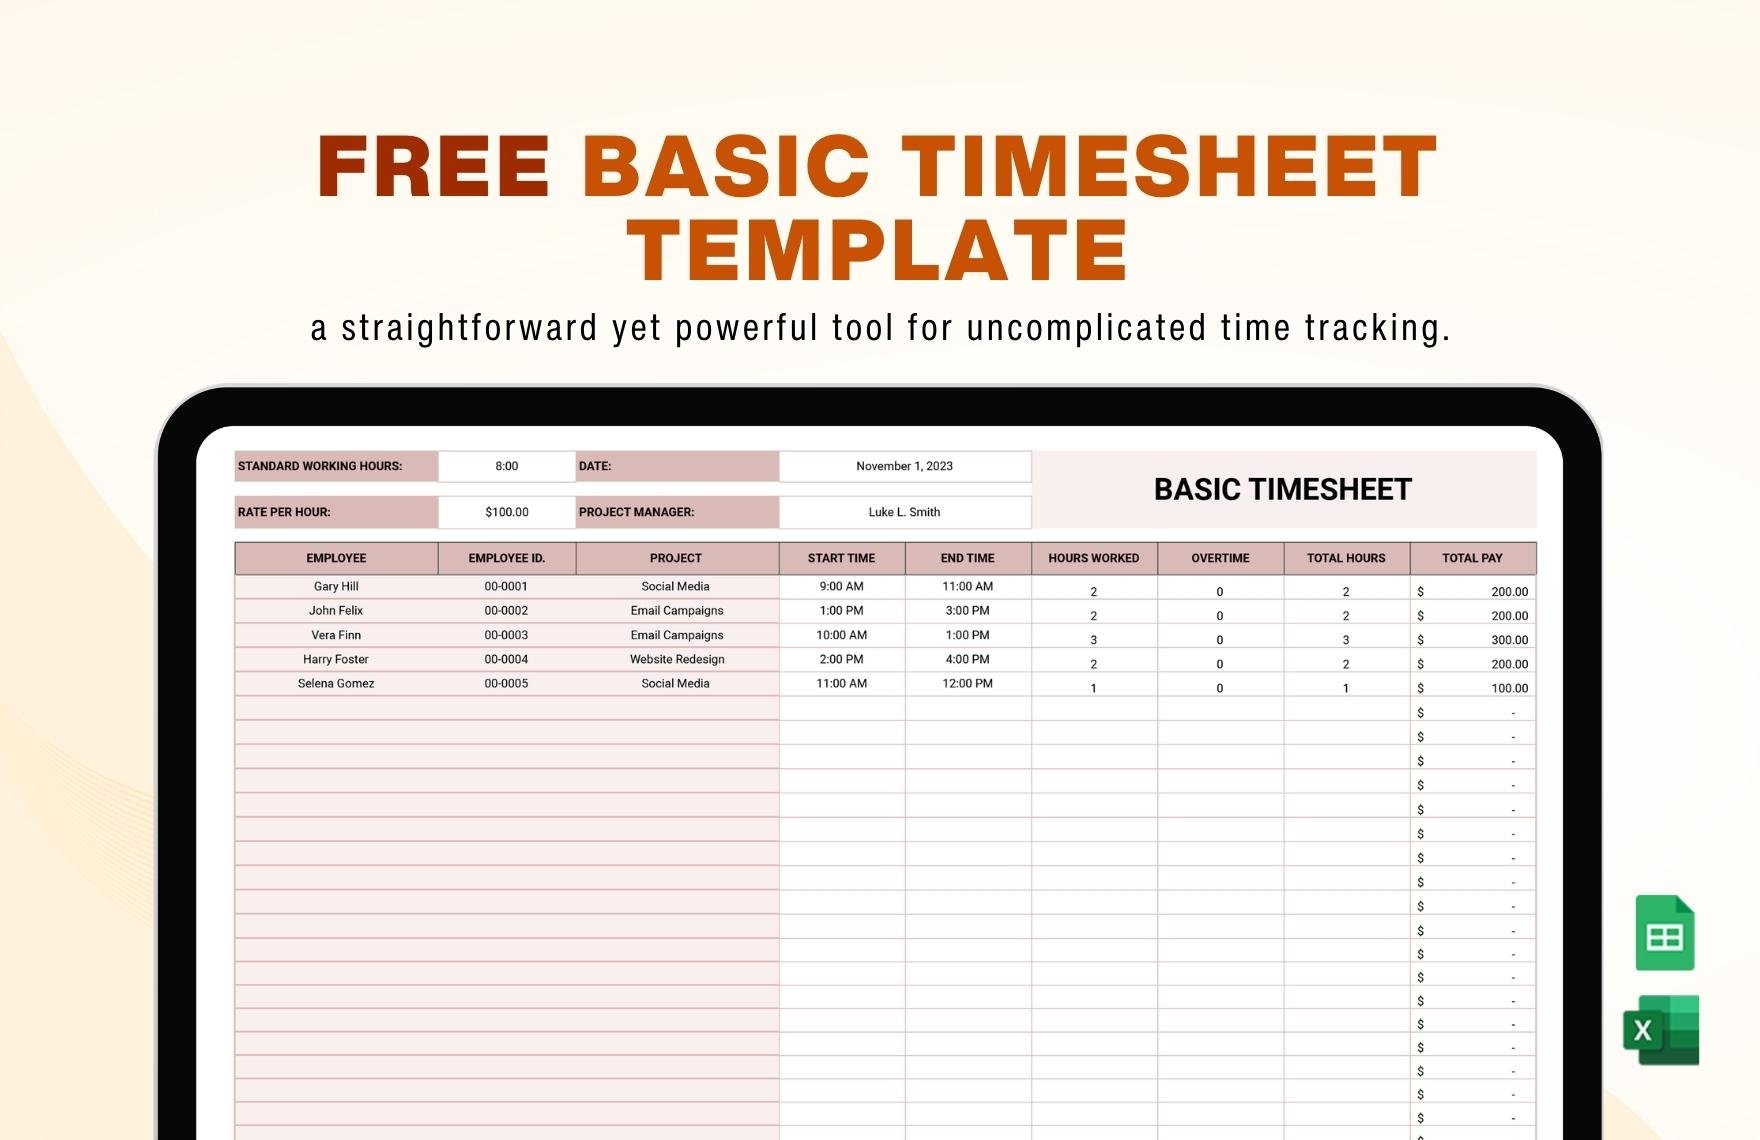 Basic Timesheet Template